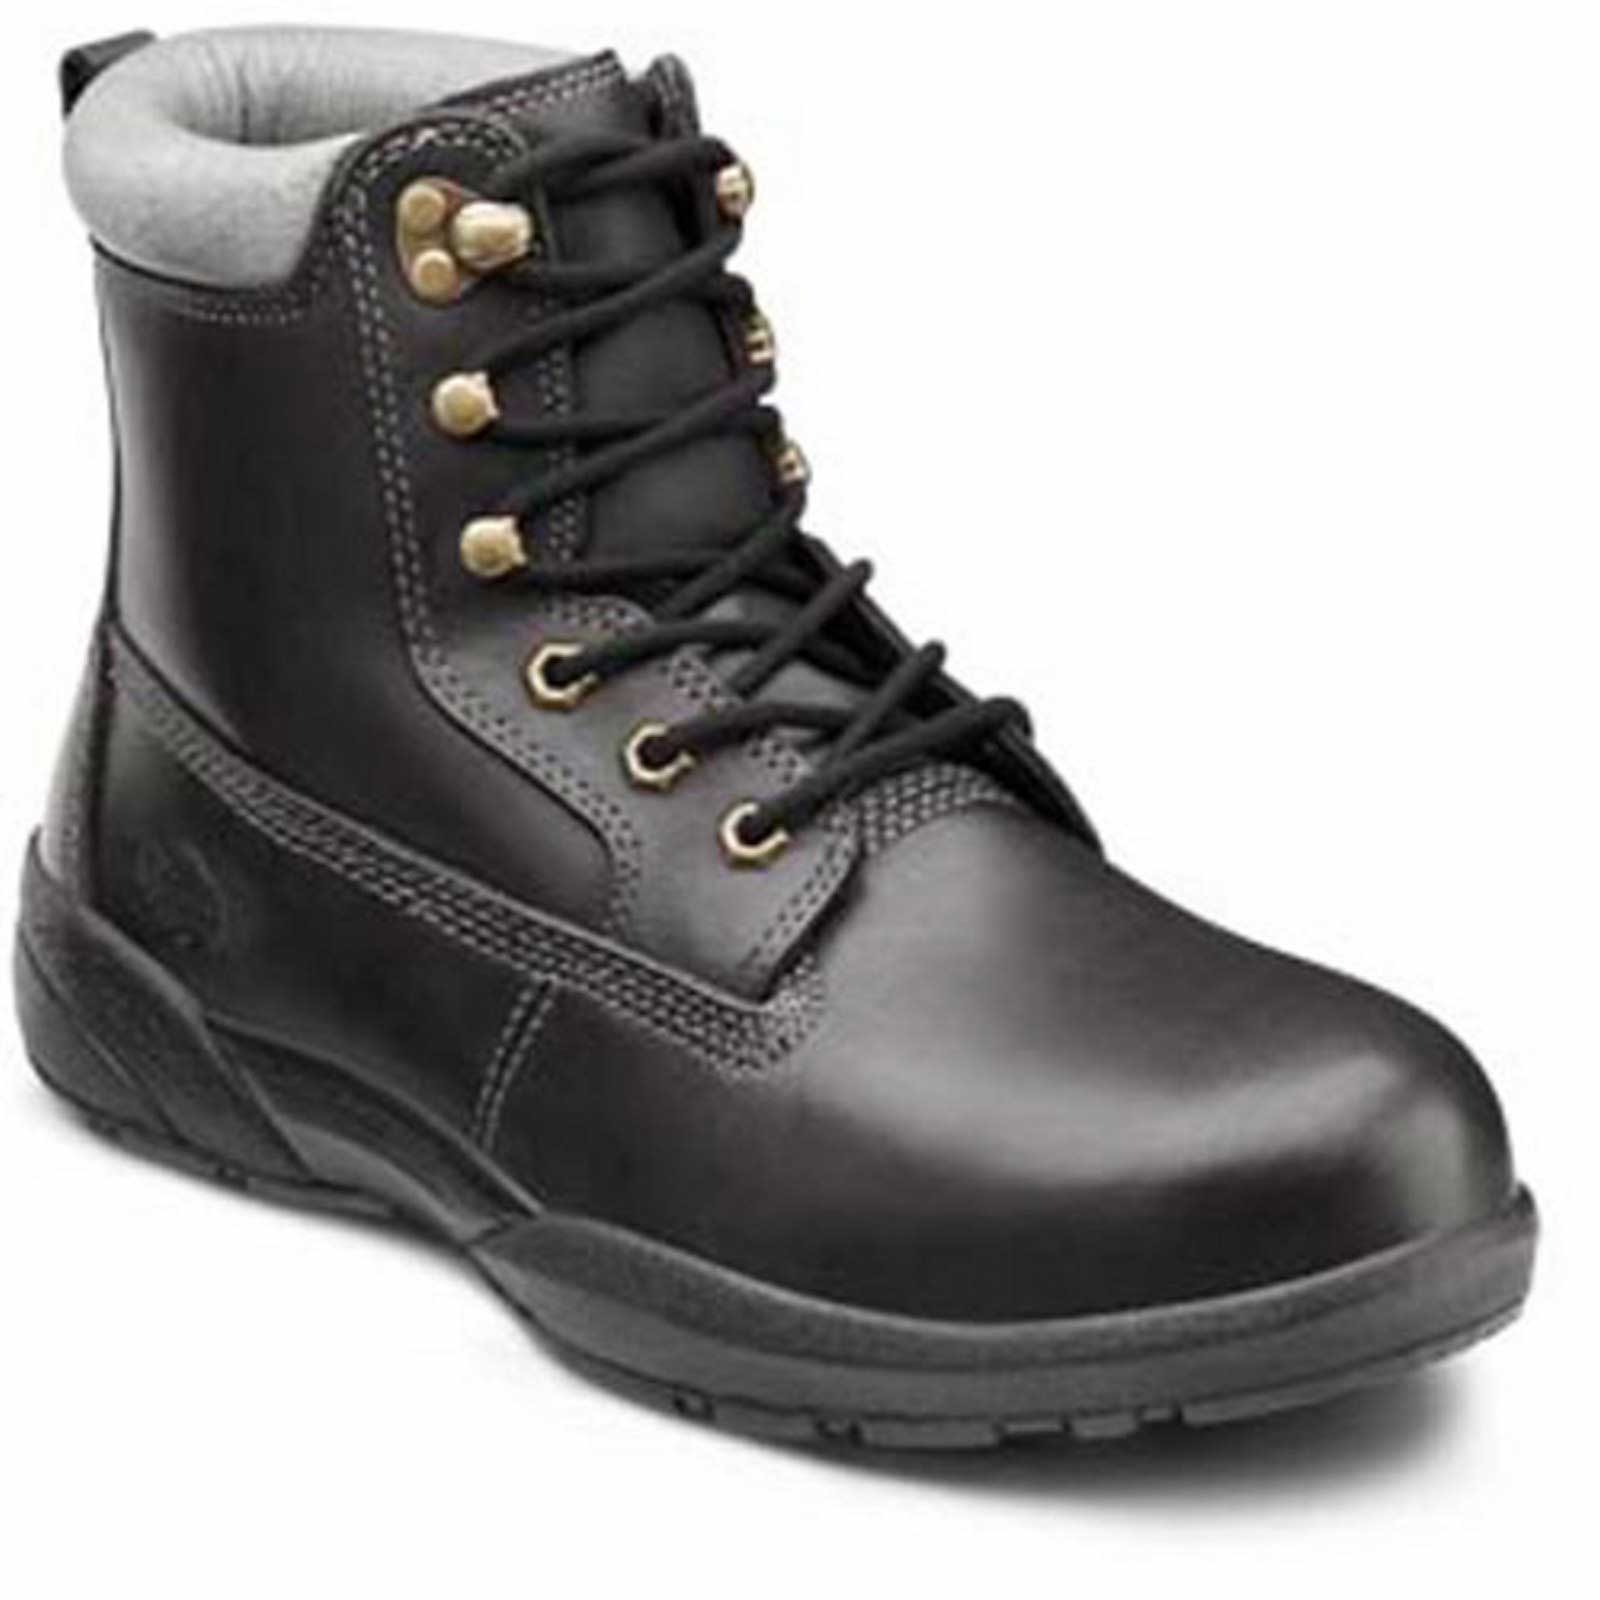 4e waterproof boots